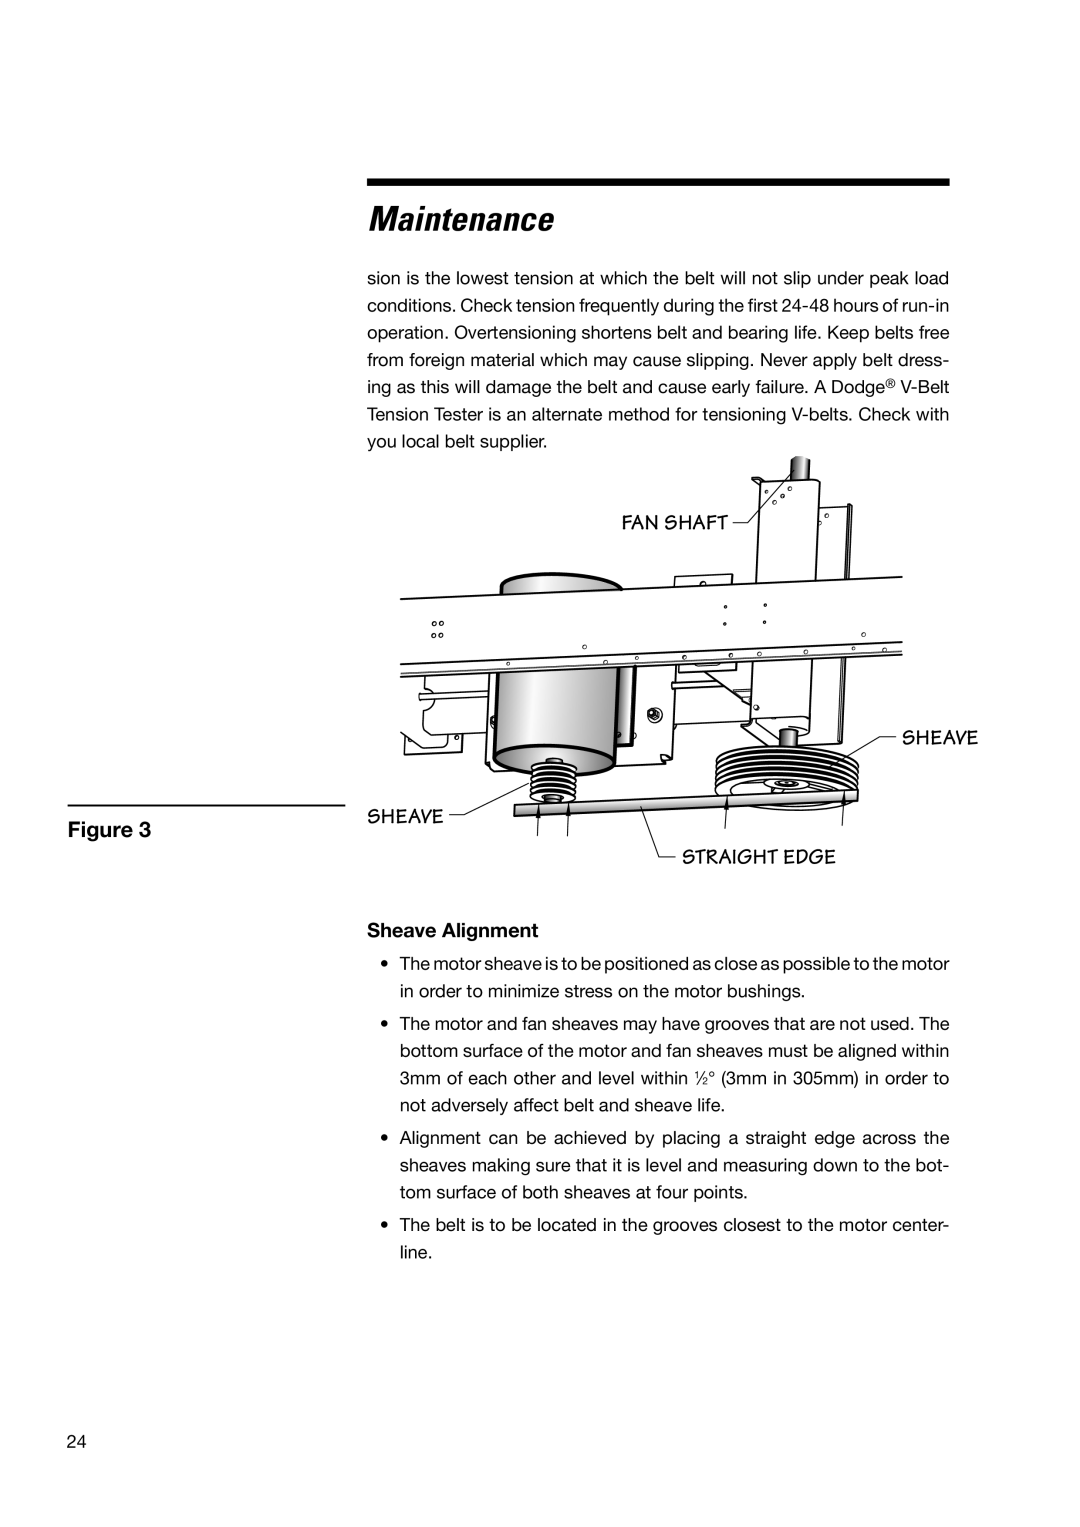 SPX Cooling Technologies MHF705, MHF702 user manual Sheave Alignment, Maintenance, Fan Shaft Sheave, Straight Edge 